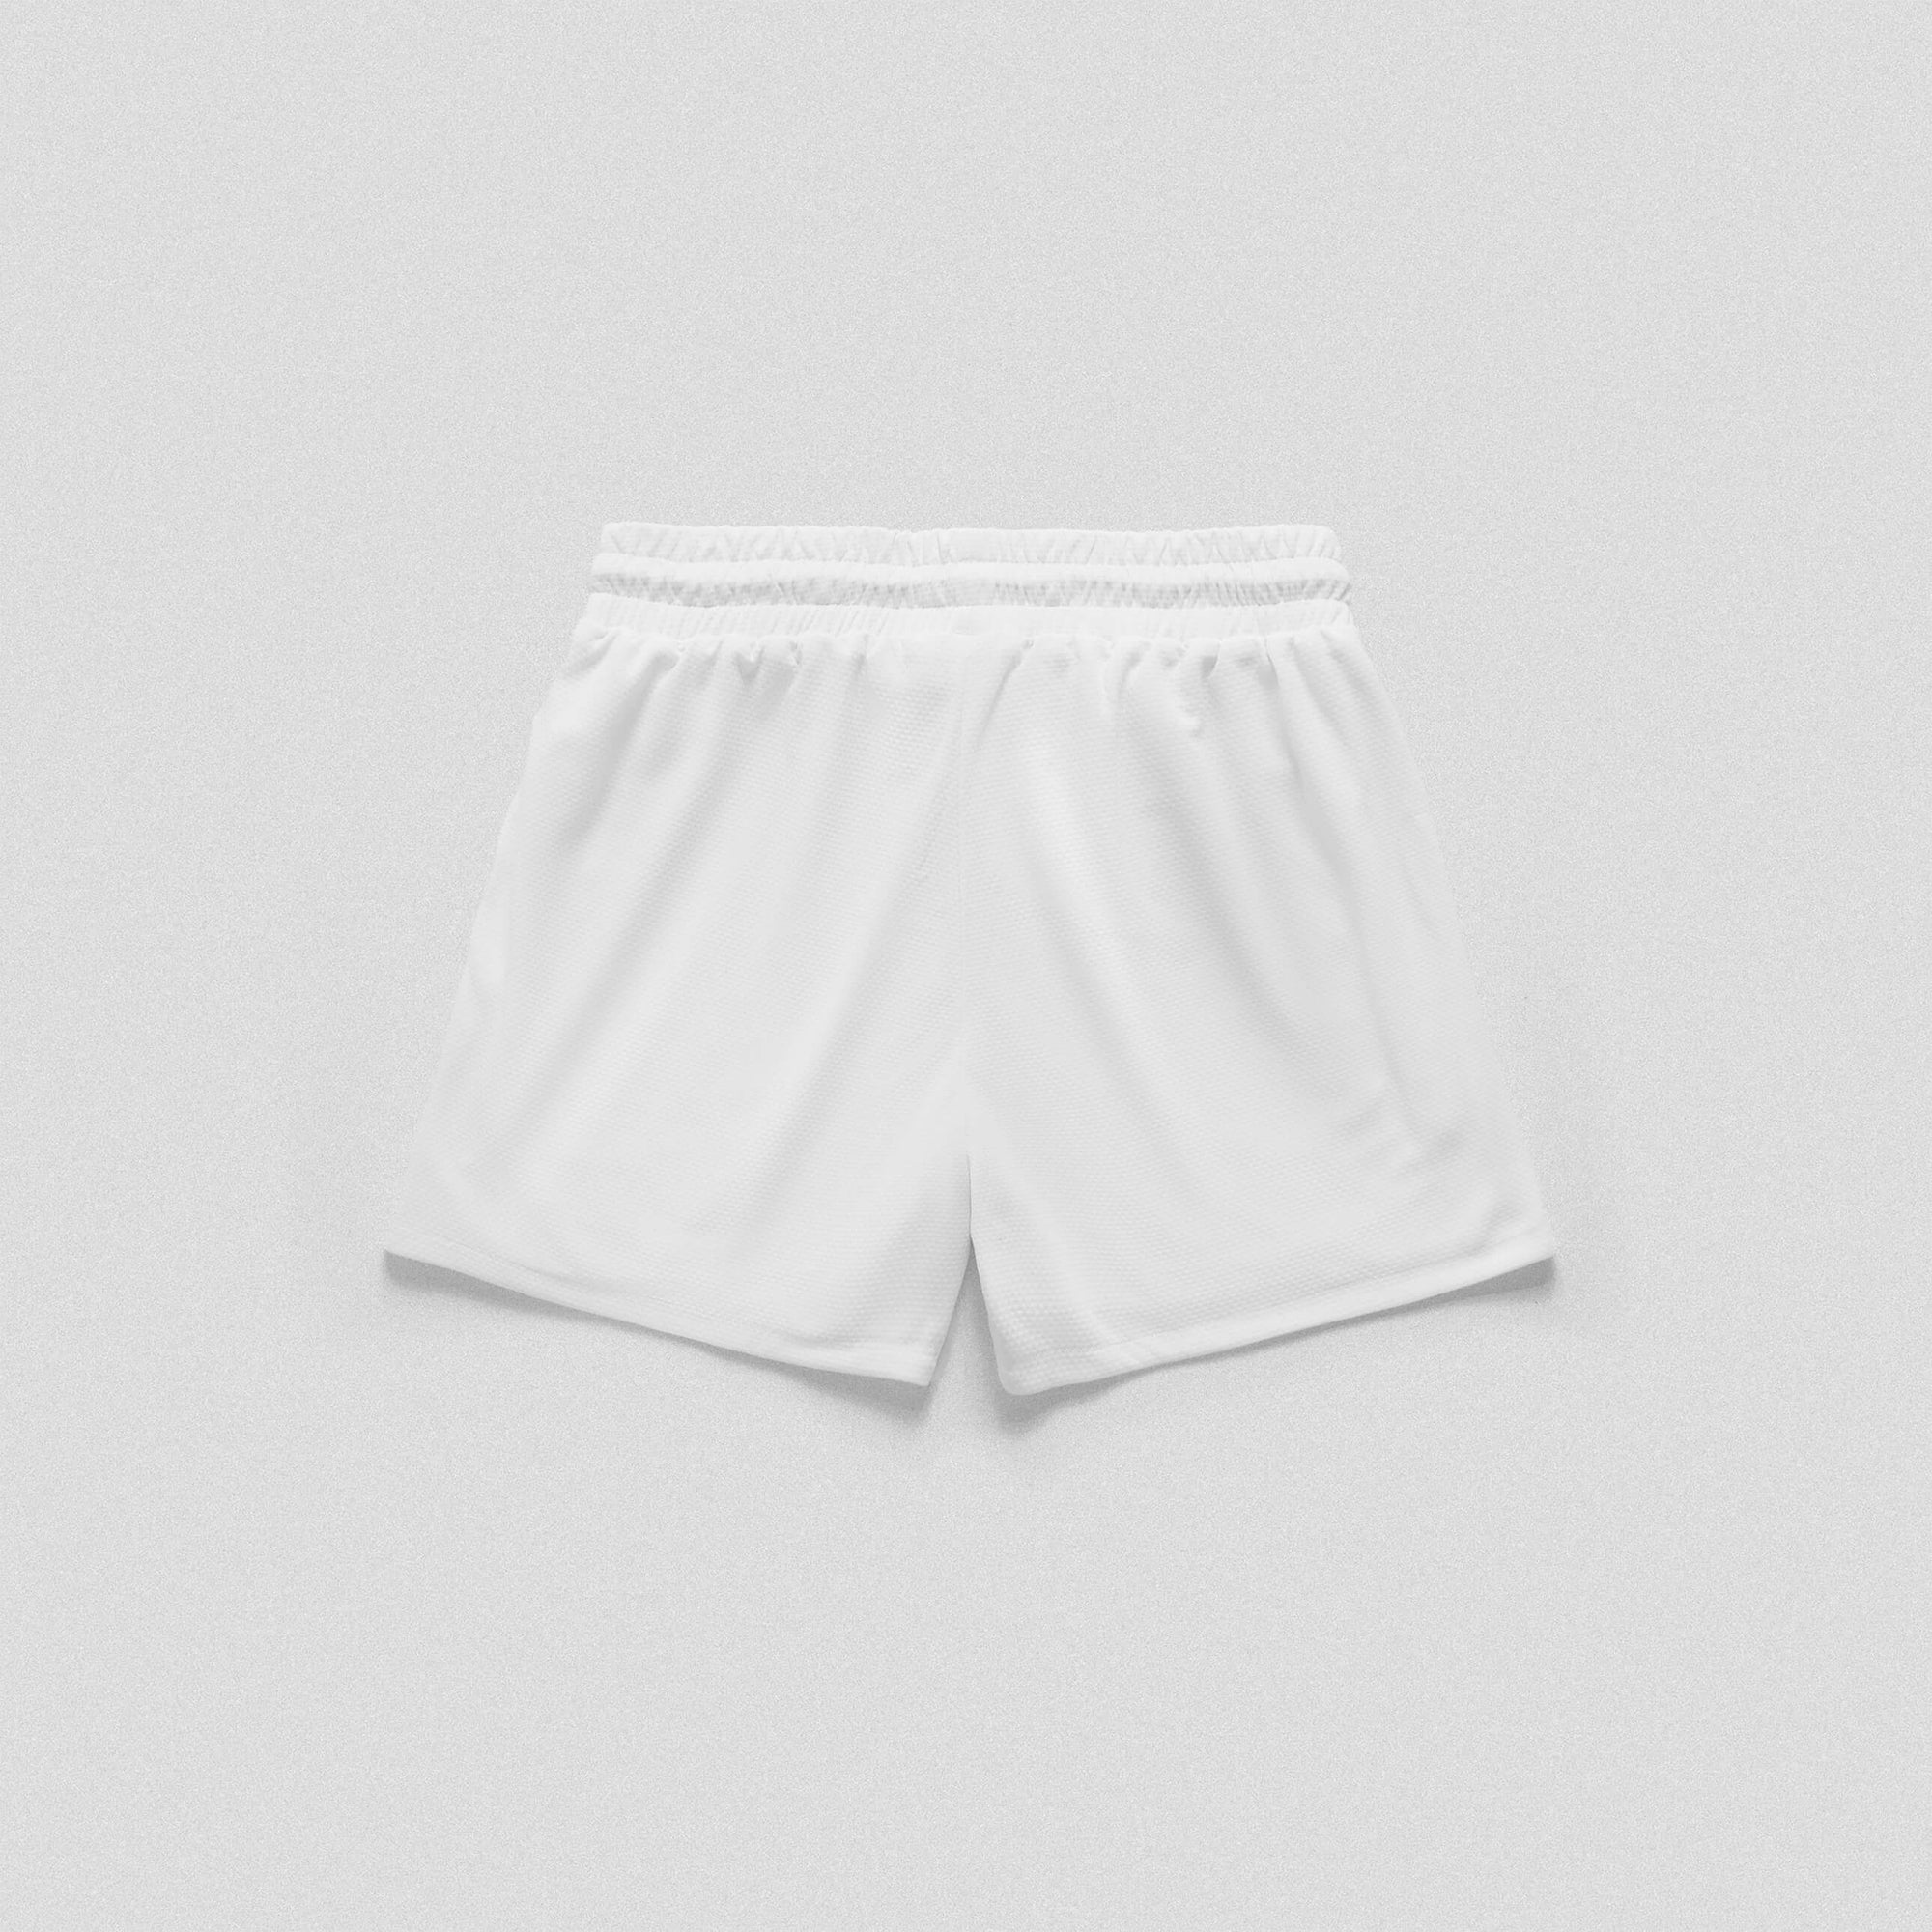 Mesh Training Shorts - White/Balboa